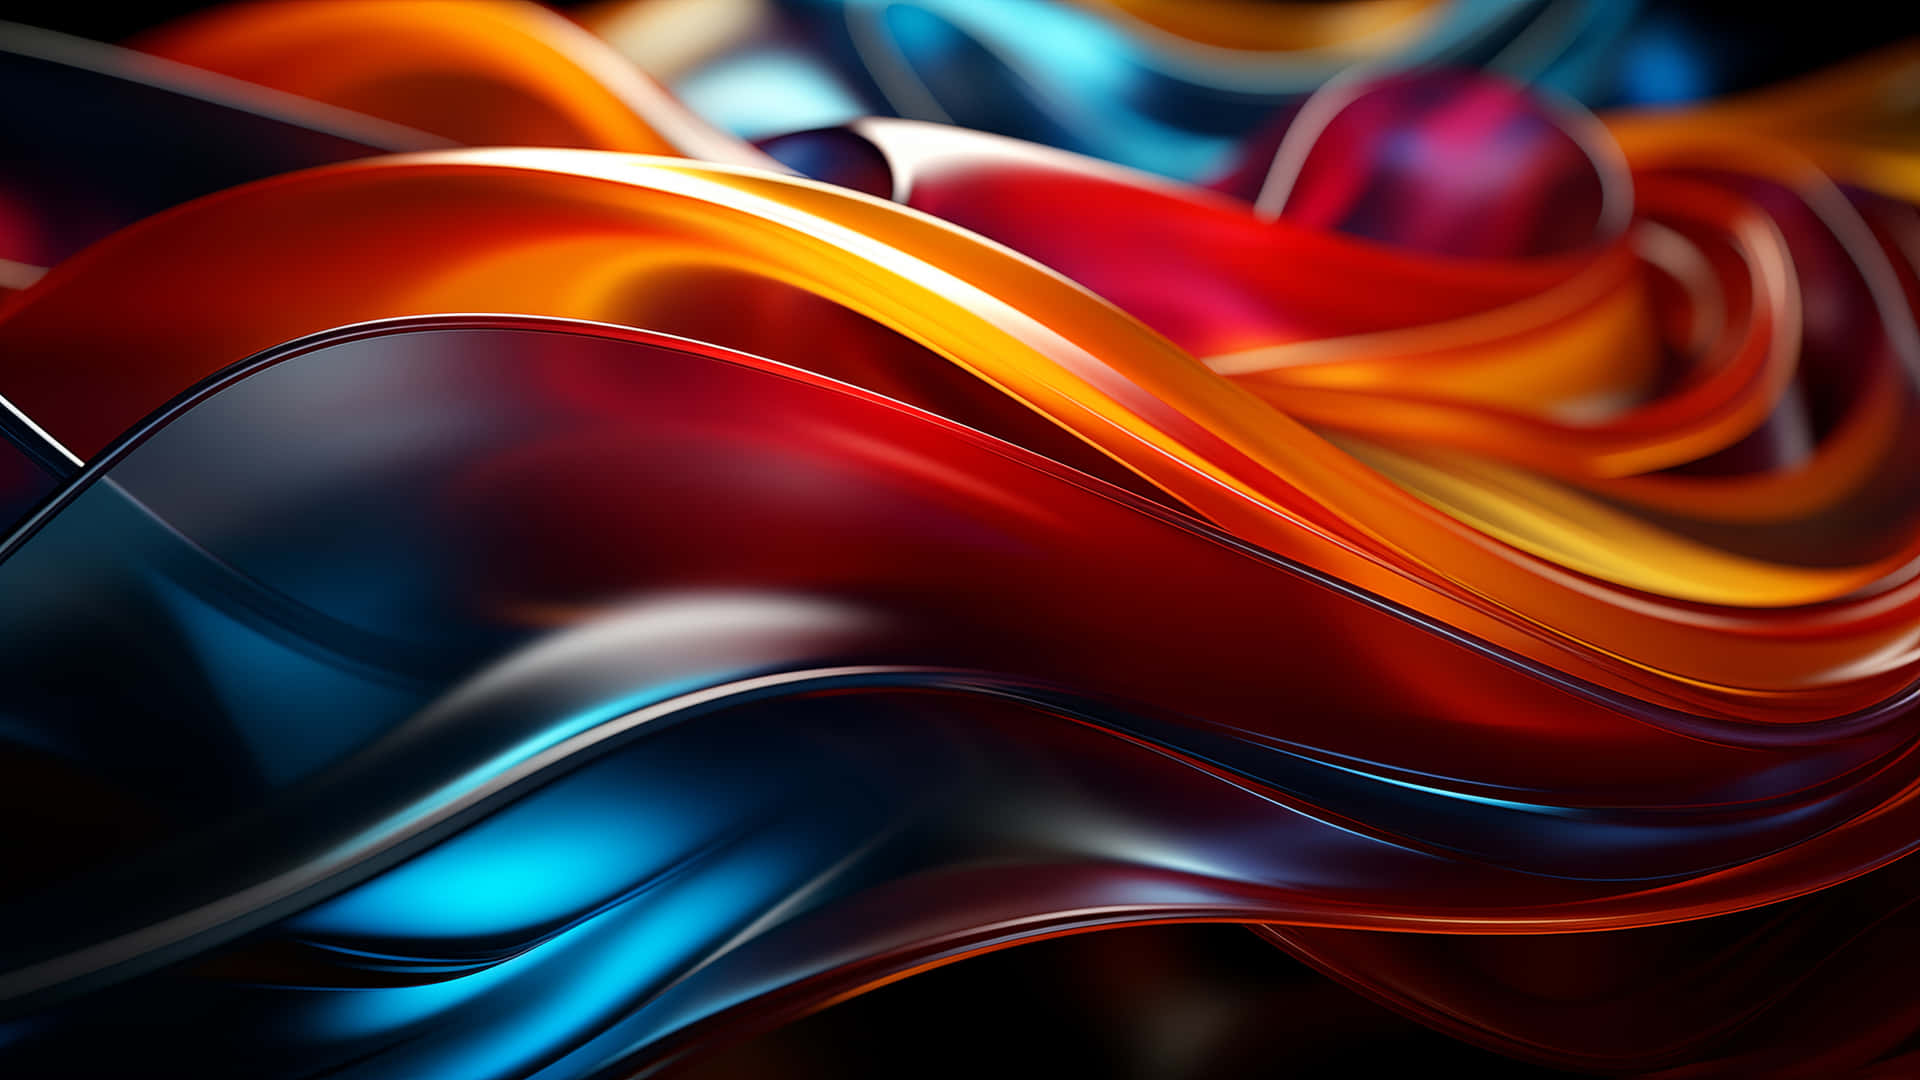 Vibrant Abstract Waves Wallpaper